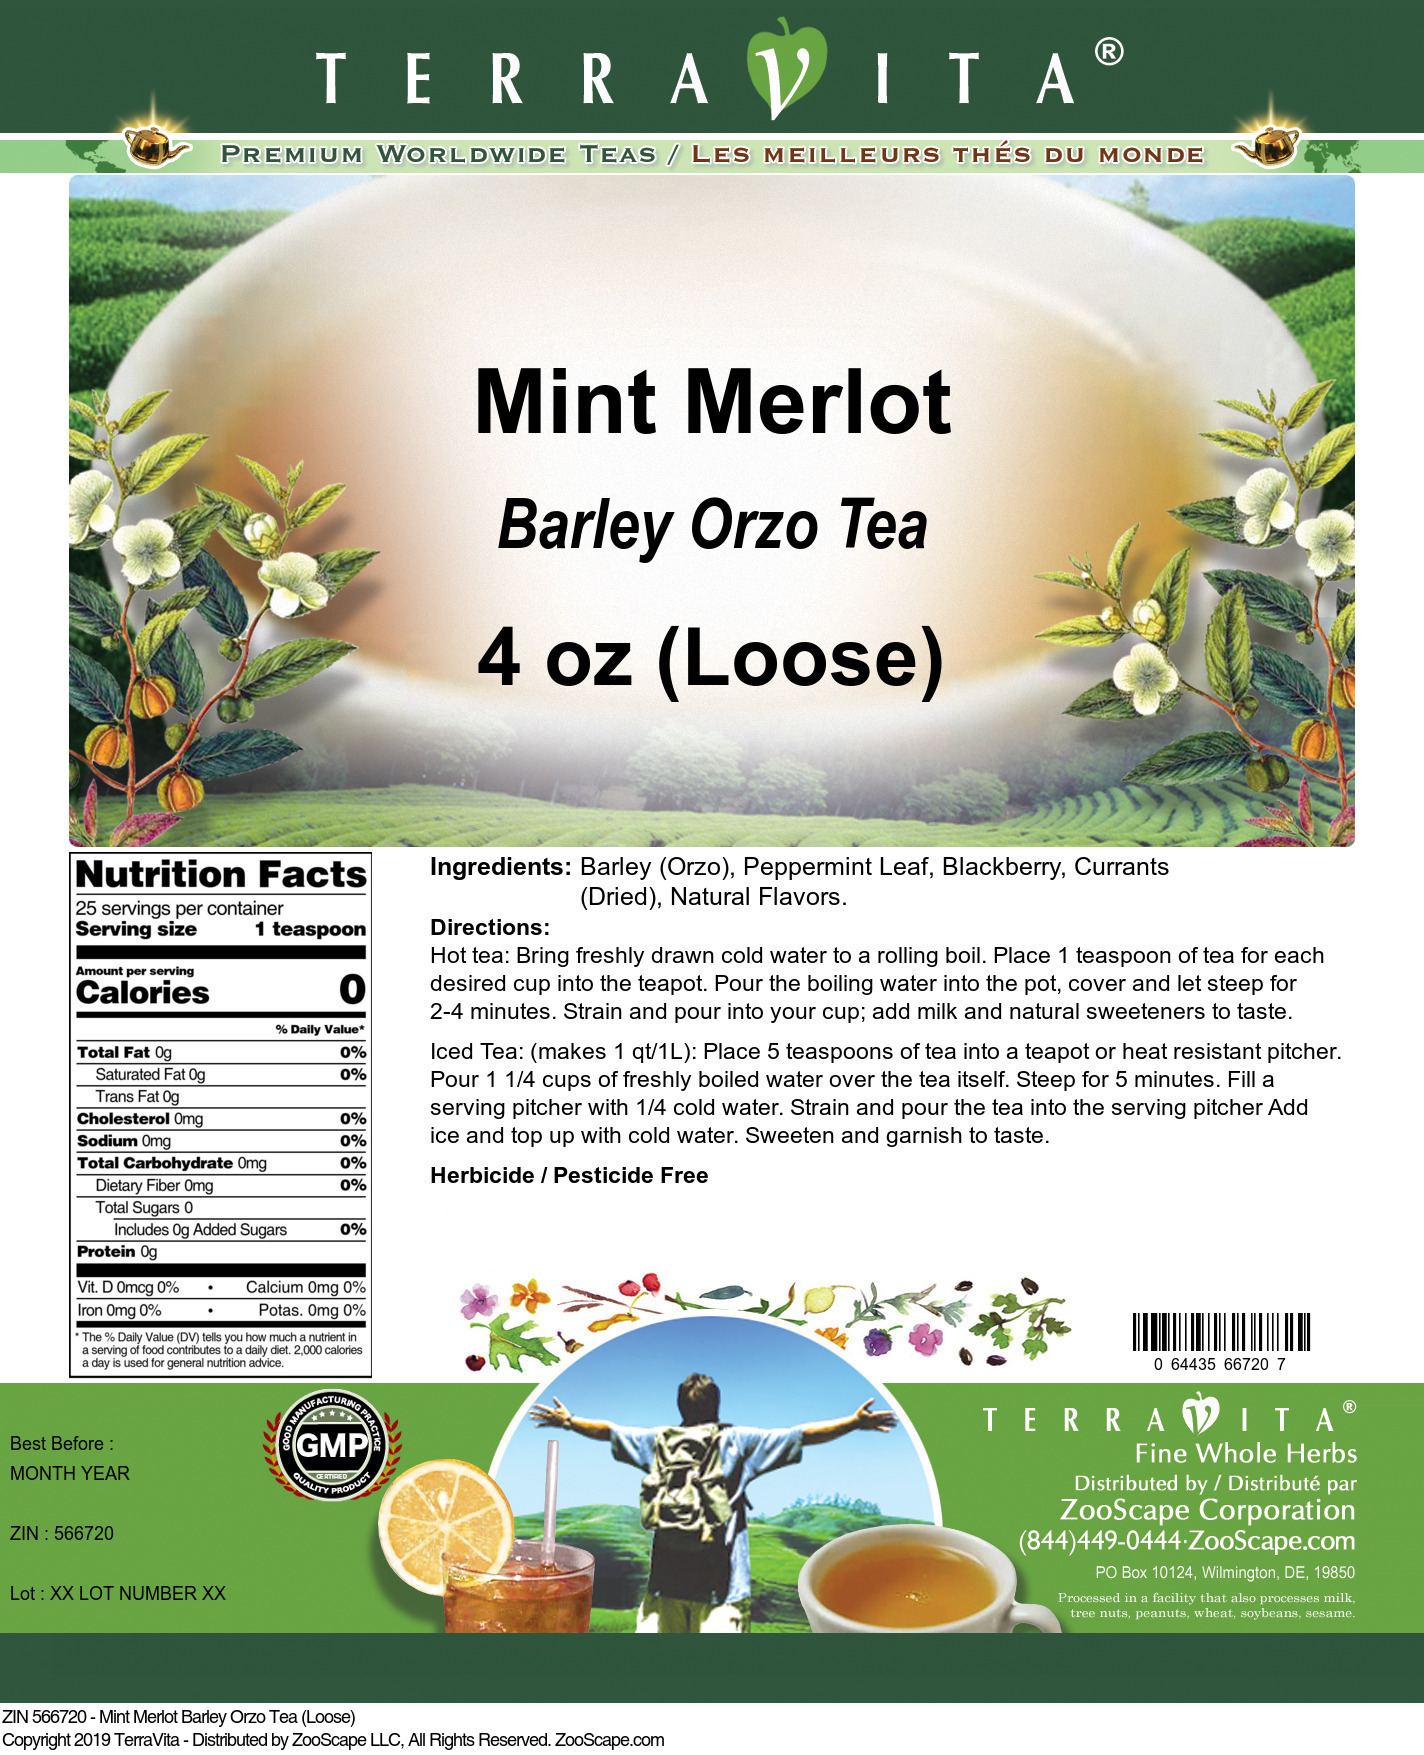 Mint Merlot Barley Orzo Tea (Loose) - Label